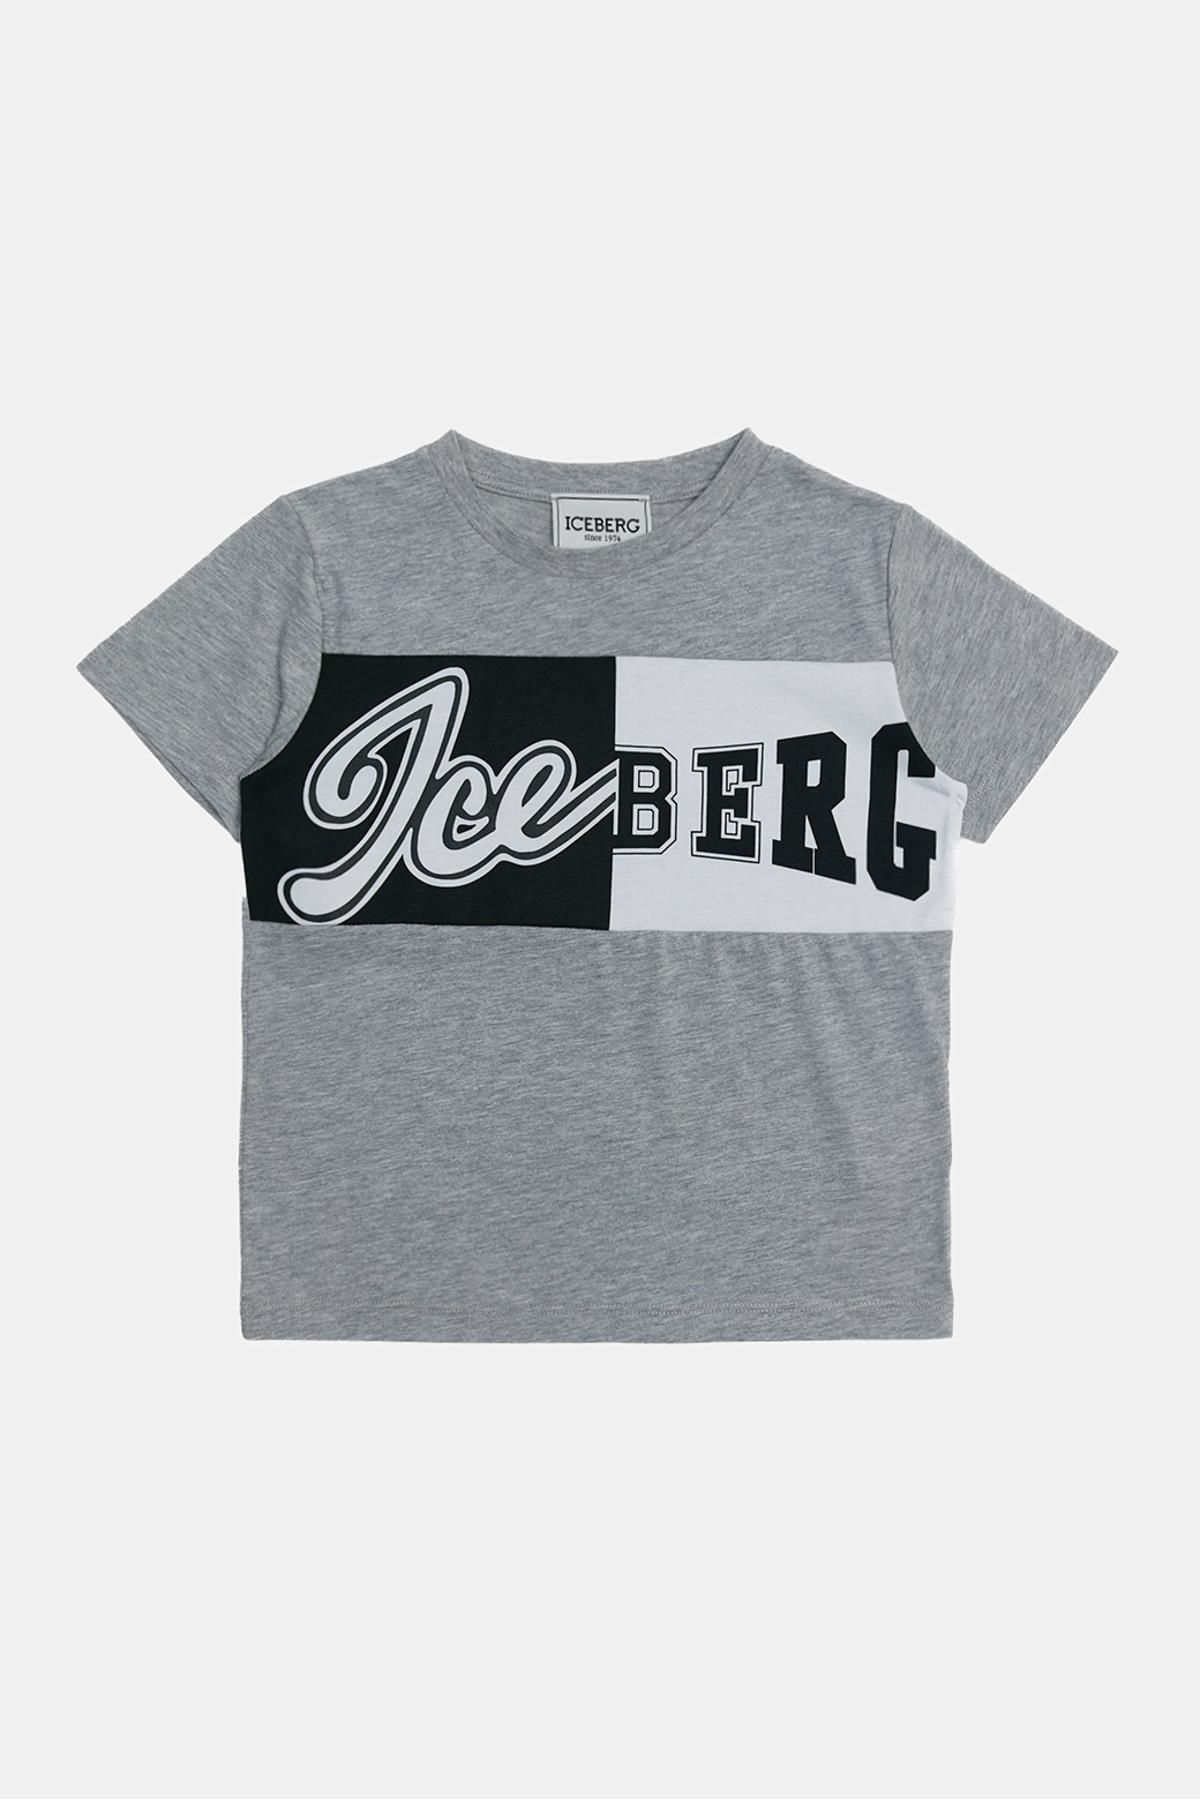 Iceberg Bg Store Erkek Çocuk Gri T-shirt 23ssıts3115